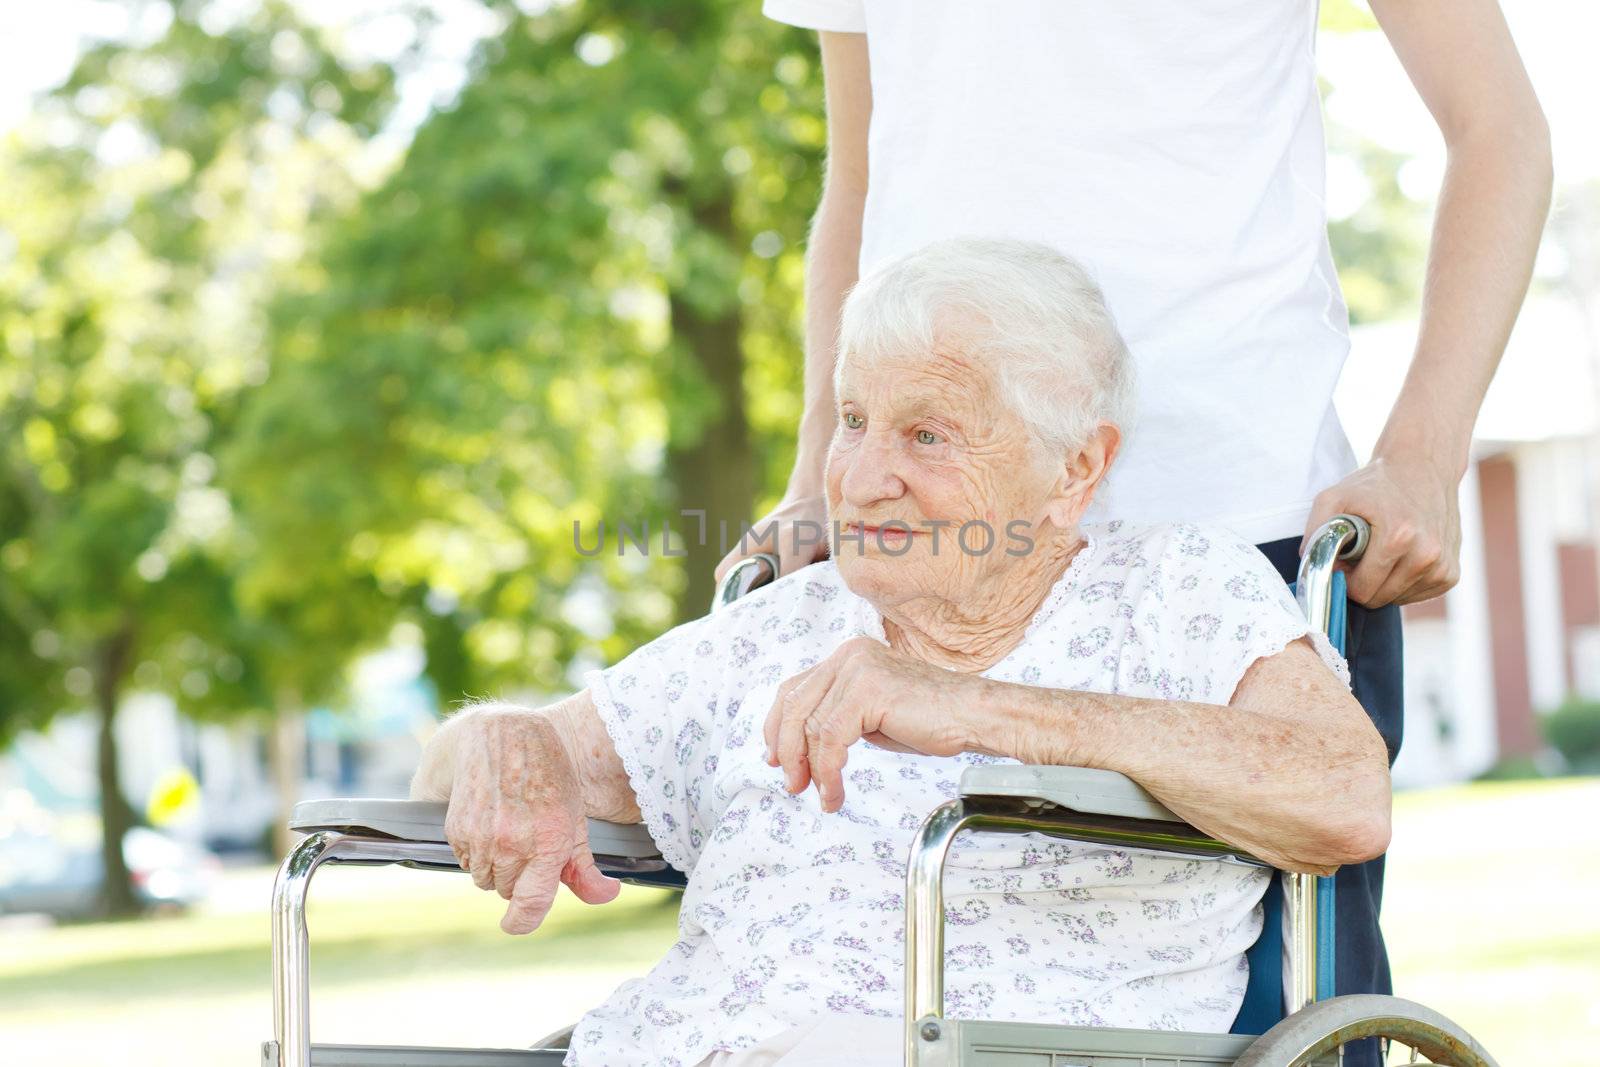 Senior Women in Wheelchair with Caretaker by melpomene